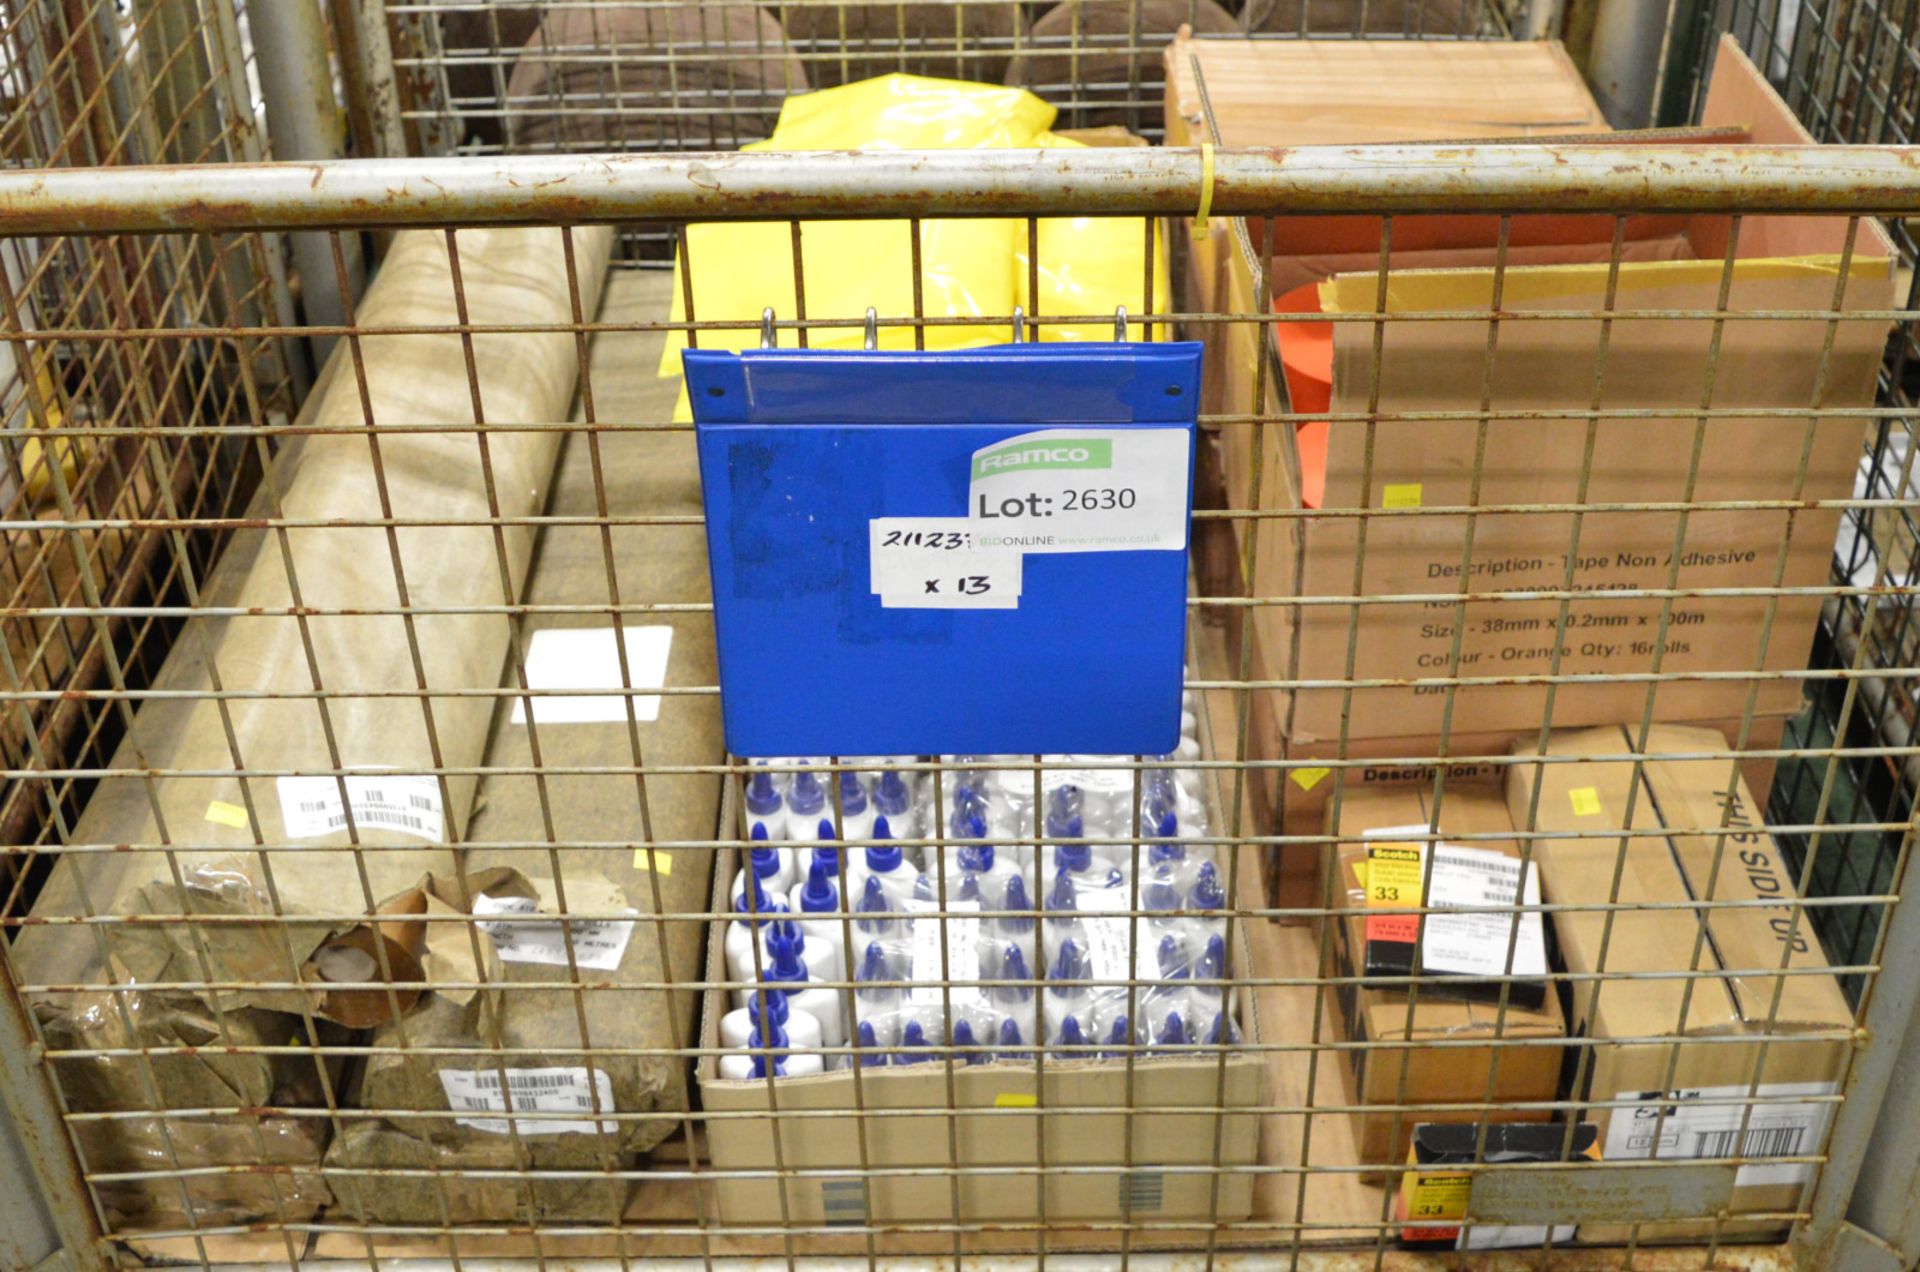 10x Rolls Waxed Paper, 70x Bottles Impega 'School Glue', 1x Box Yellow Waste Sacks, 64x Ro